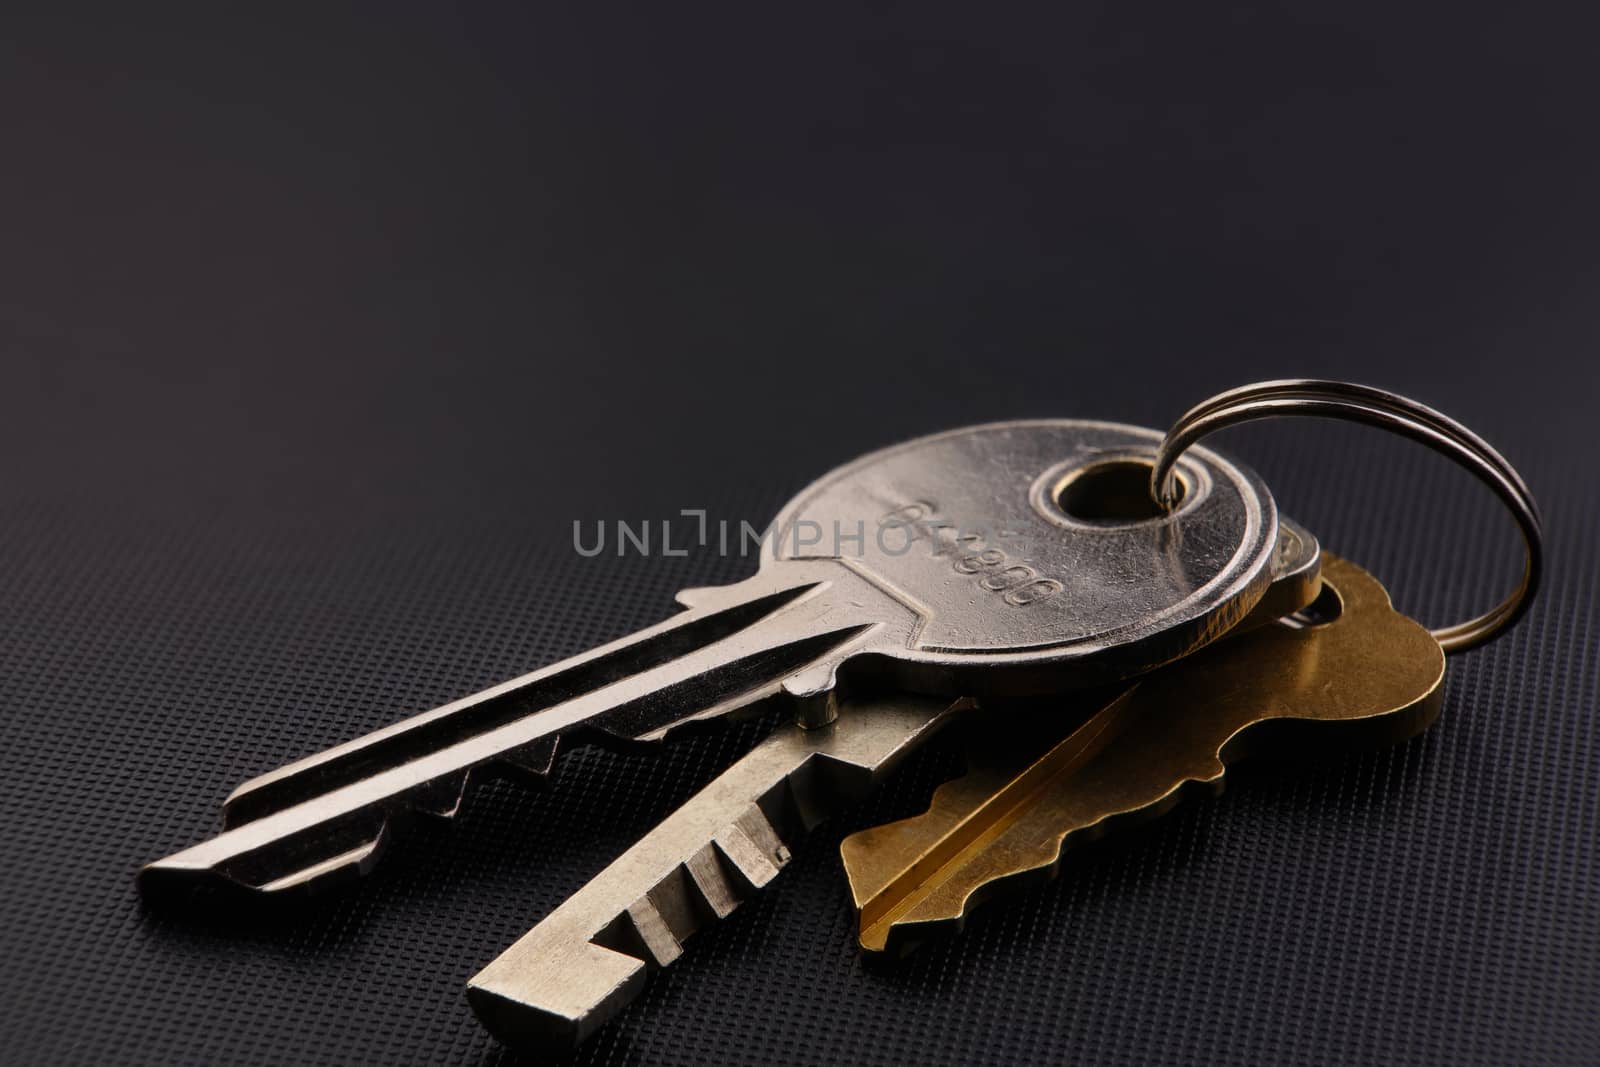 set of three keys on a black background